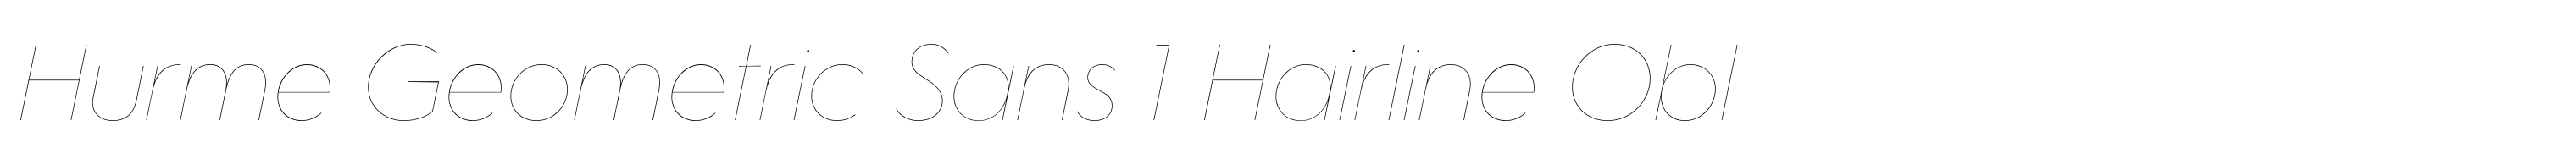 Hurme Geometric Sans 1 Hairline Obl